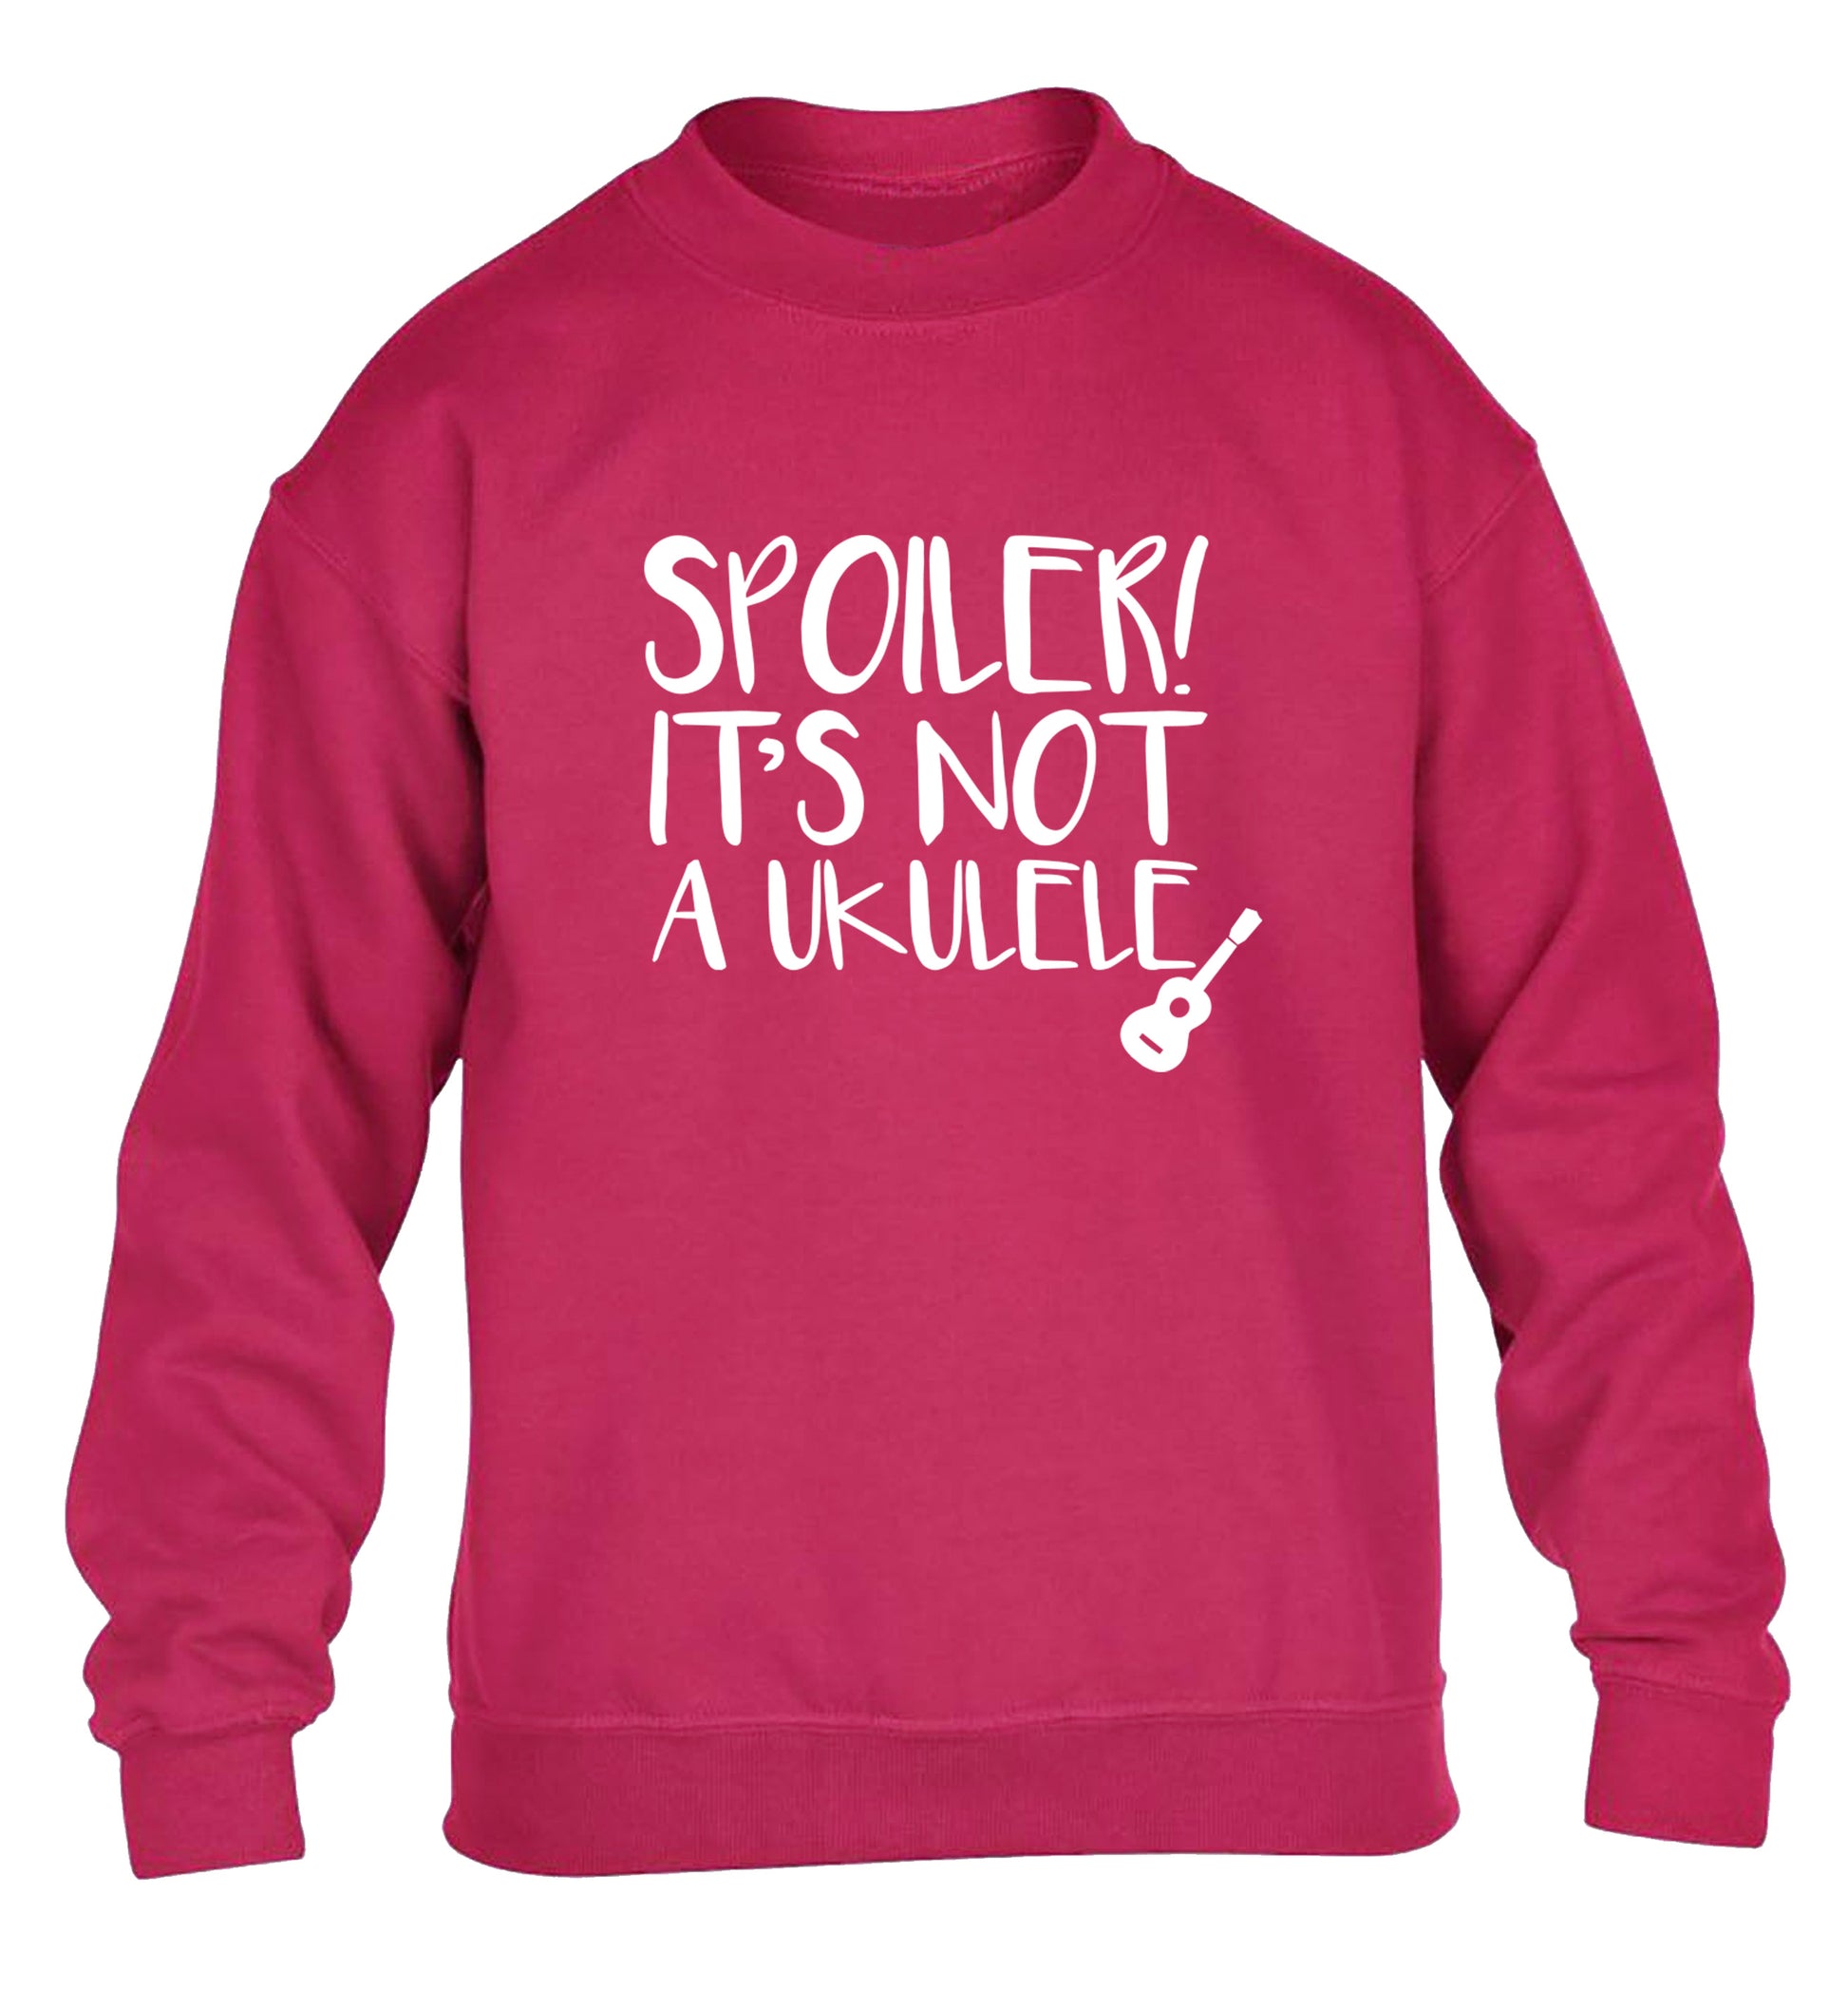 Spoiler it's not a ukulele children's pink sweater 12-13 Years